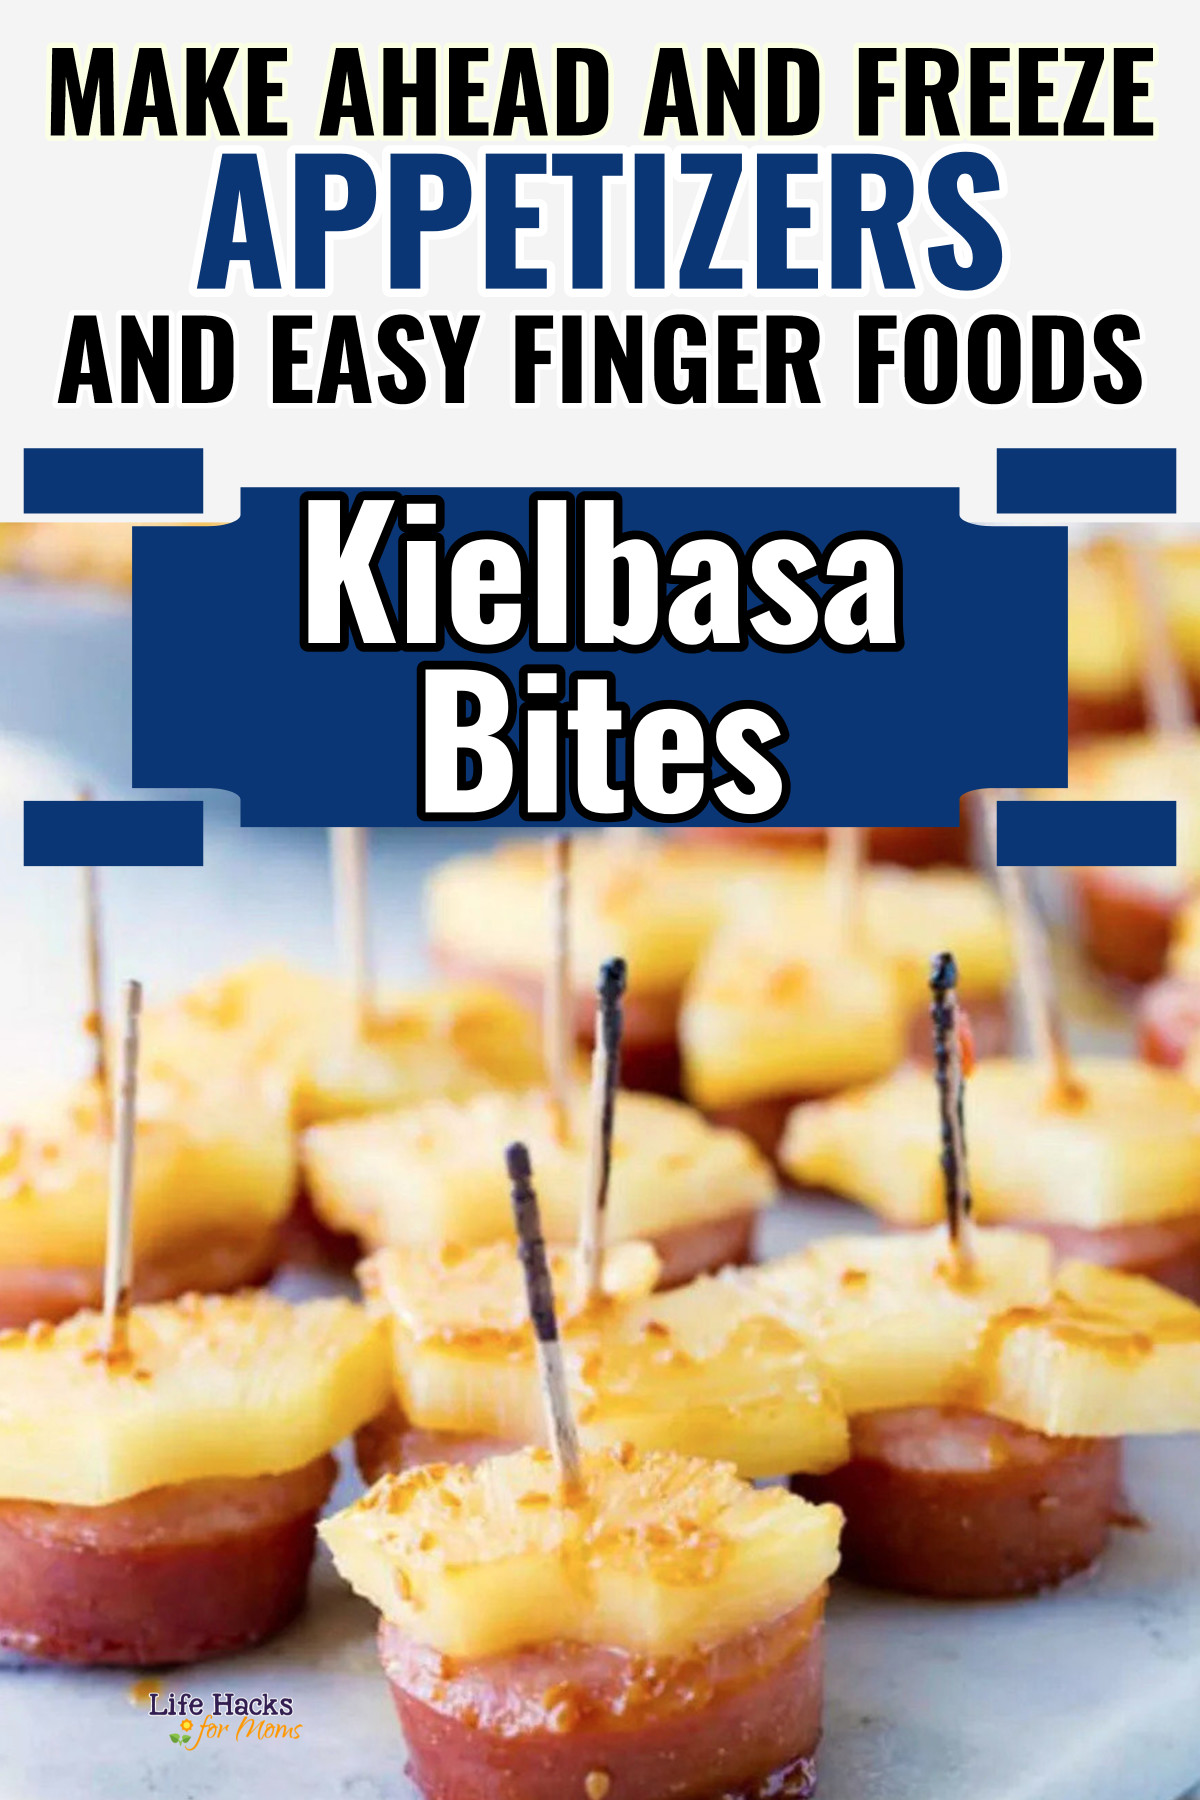 Make Ahead And Freeze Appetizers - Kielbasa Bites